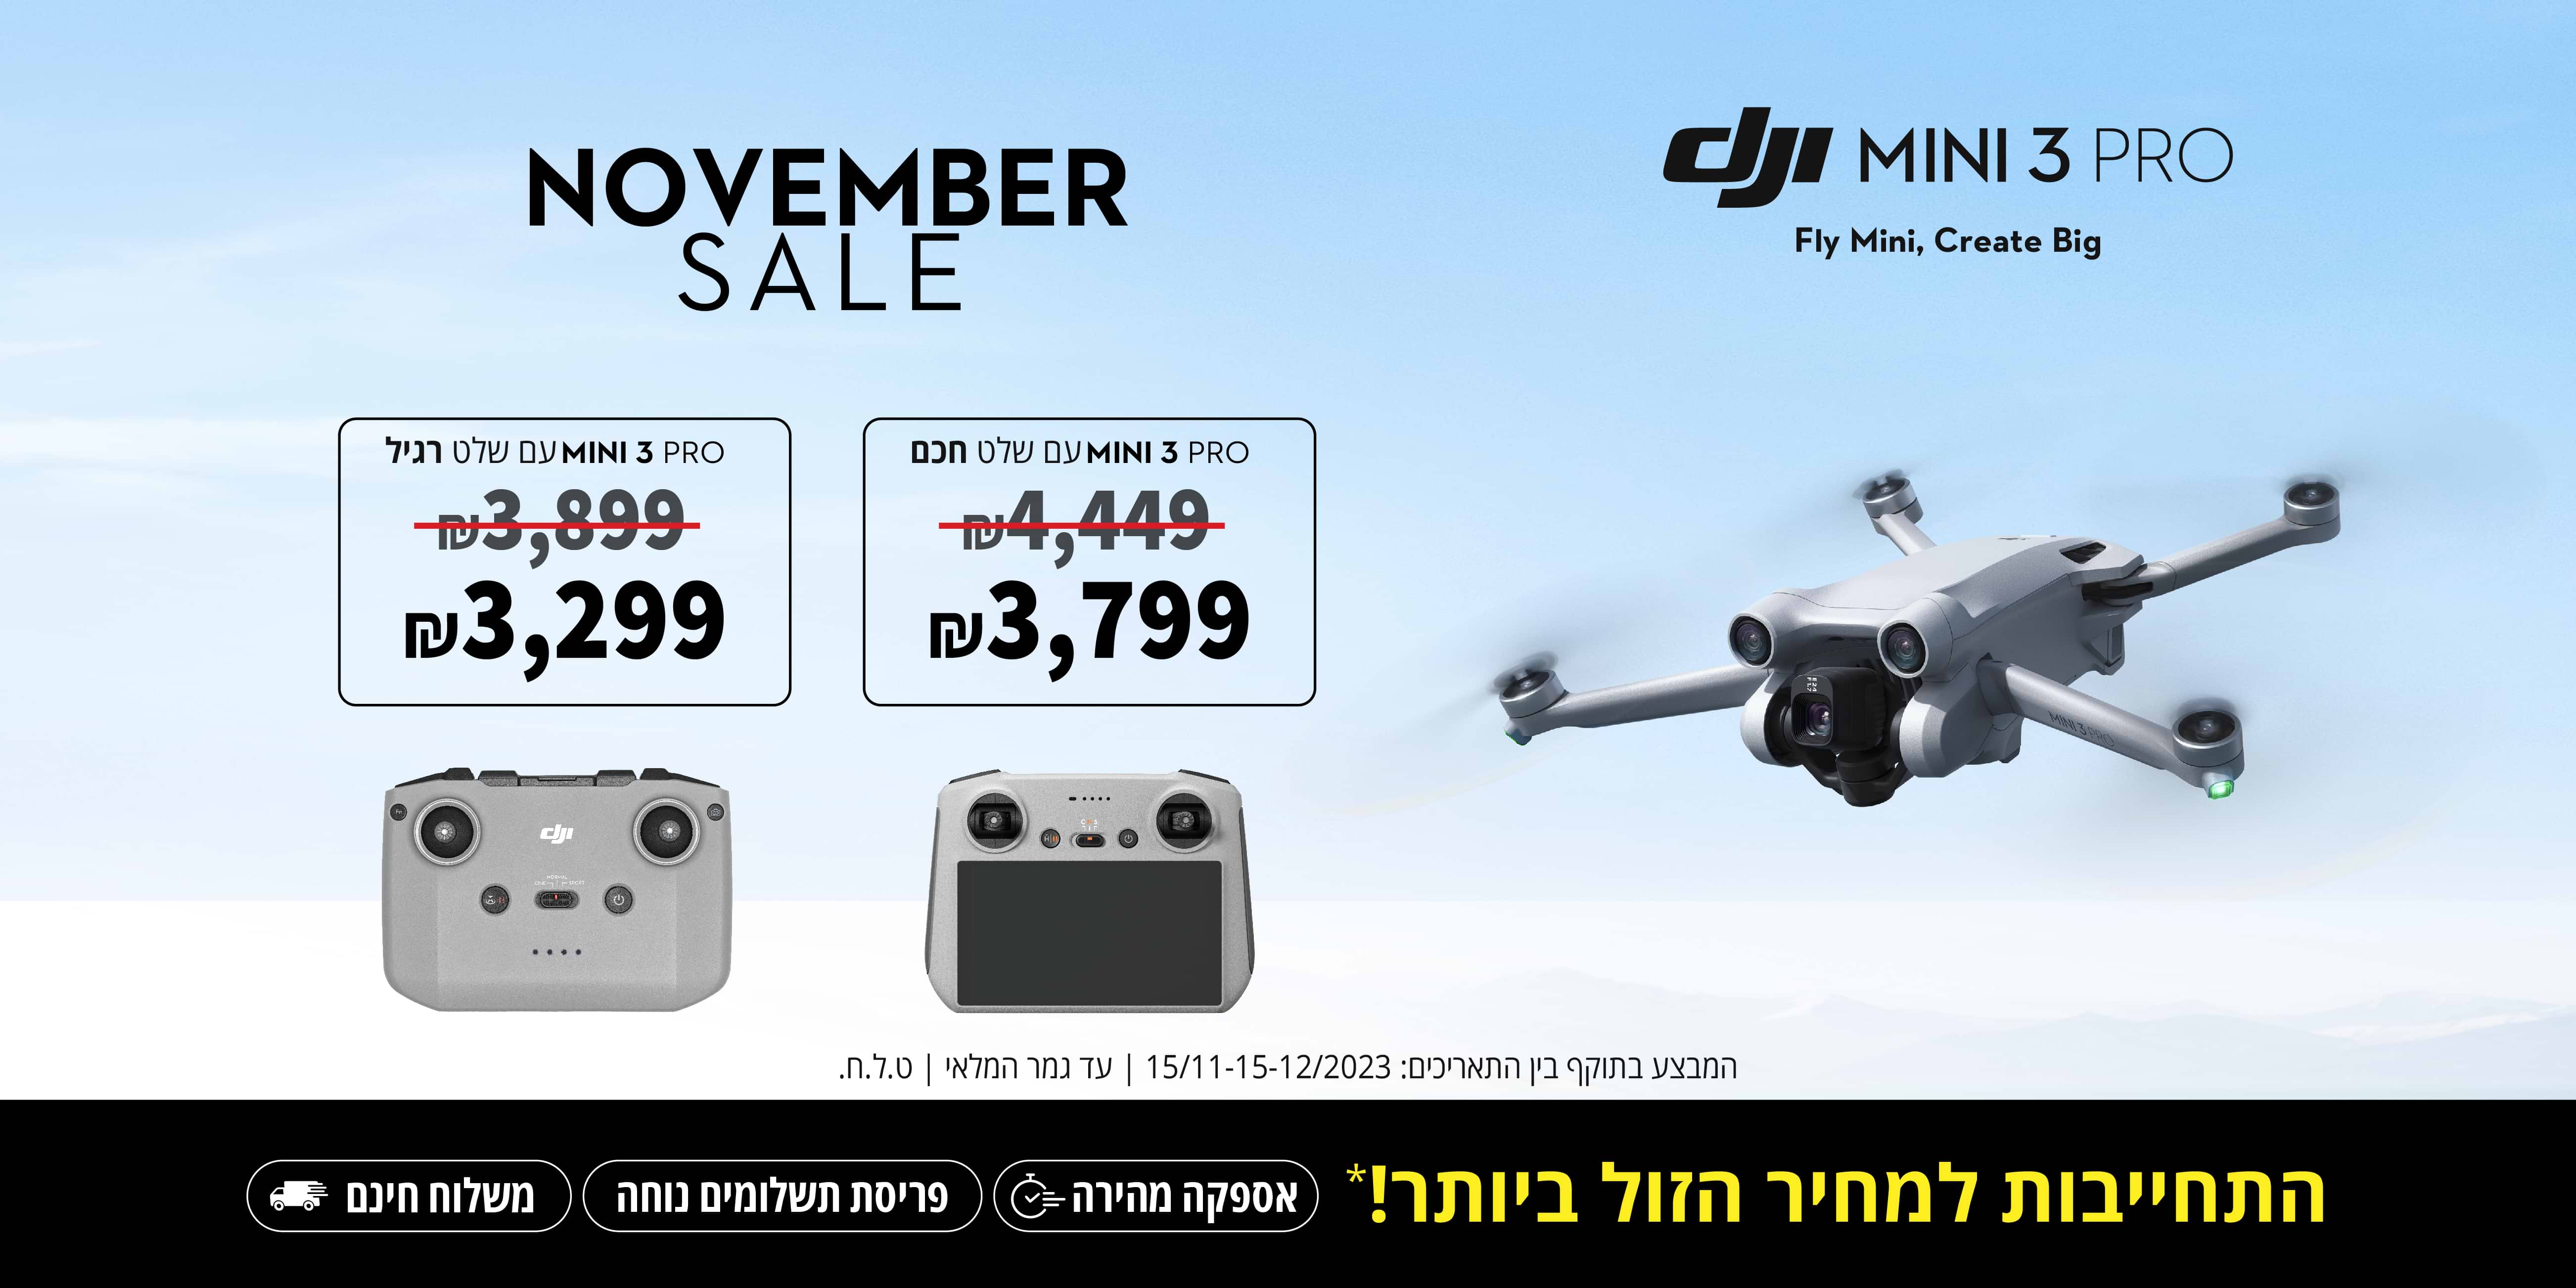 Dji mini 3 pro november sale - MINI 3 PRO עם שלט חכם ב-3799 ש